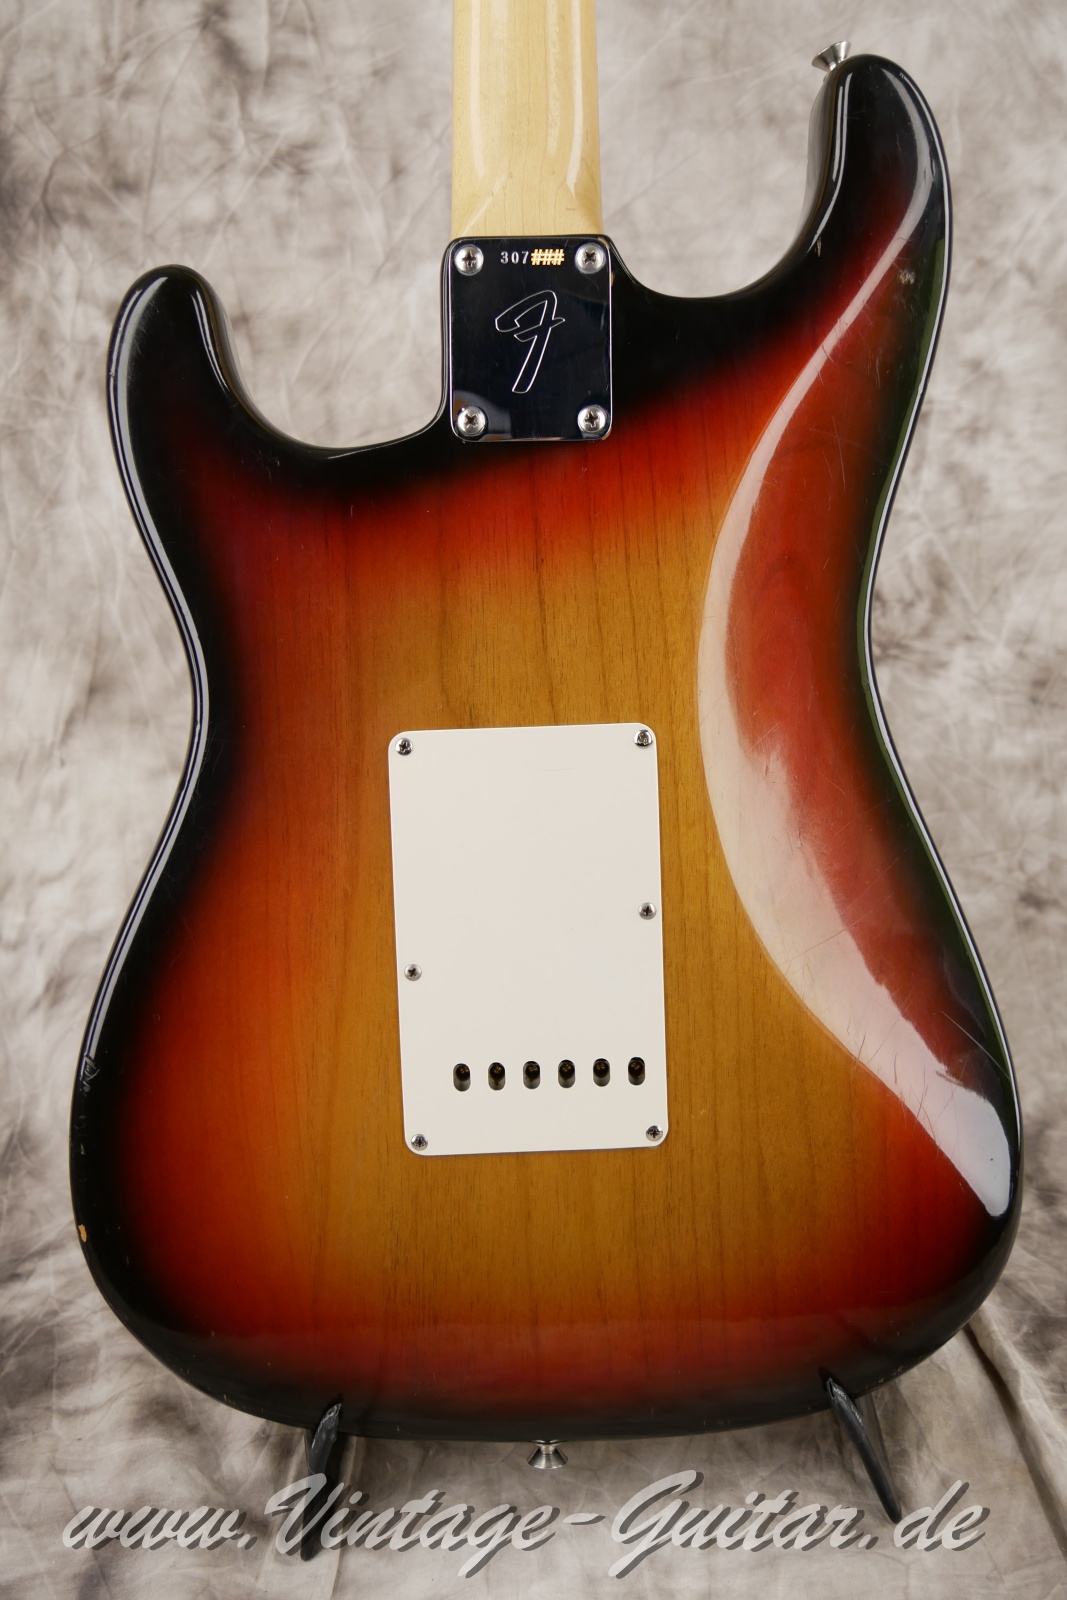 Fender_Startocaster_Baujahr_1971_USA_sunburst_all_original-008-1.JPG